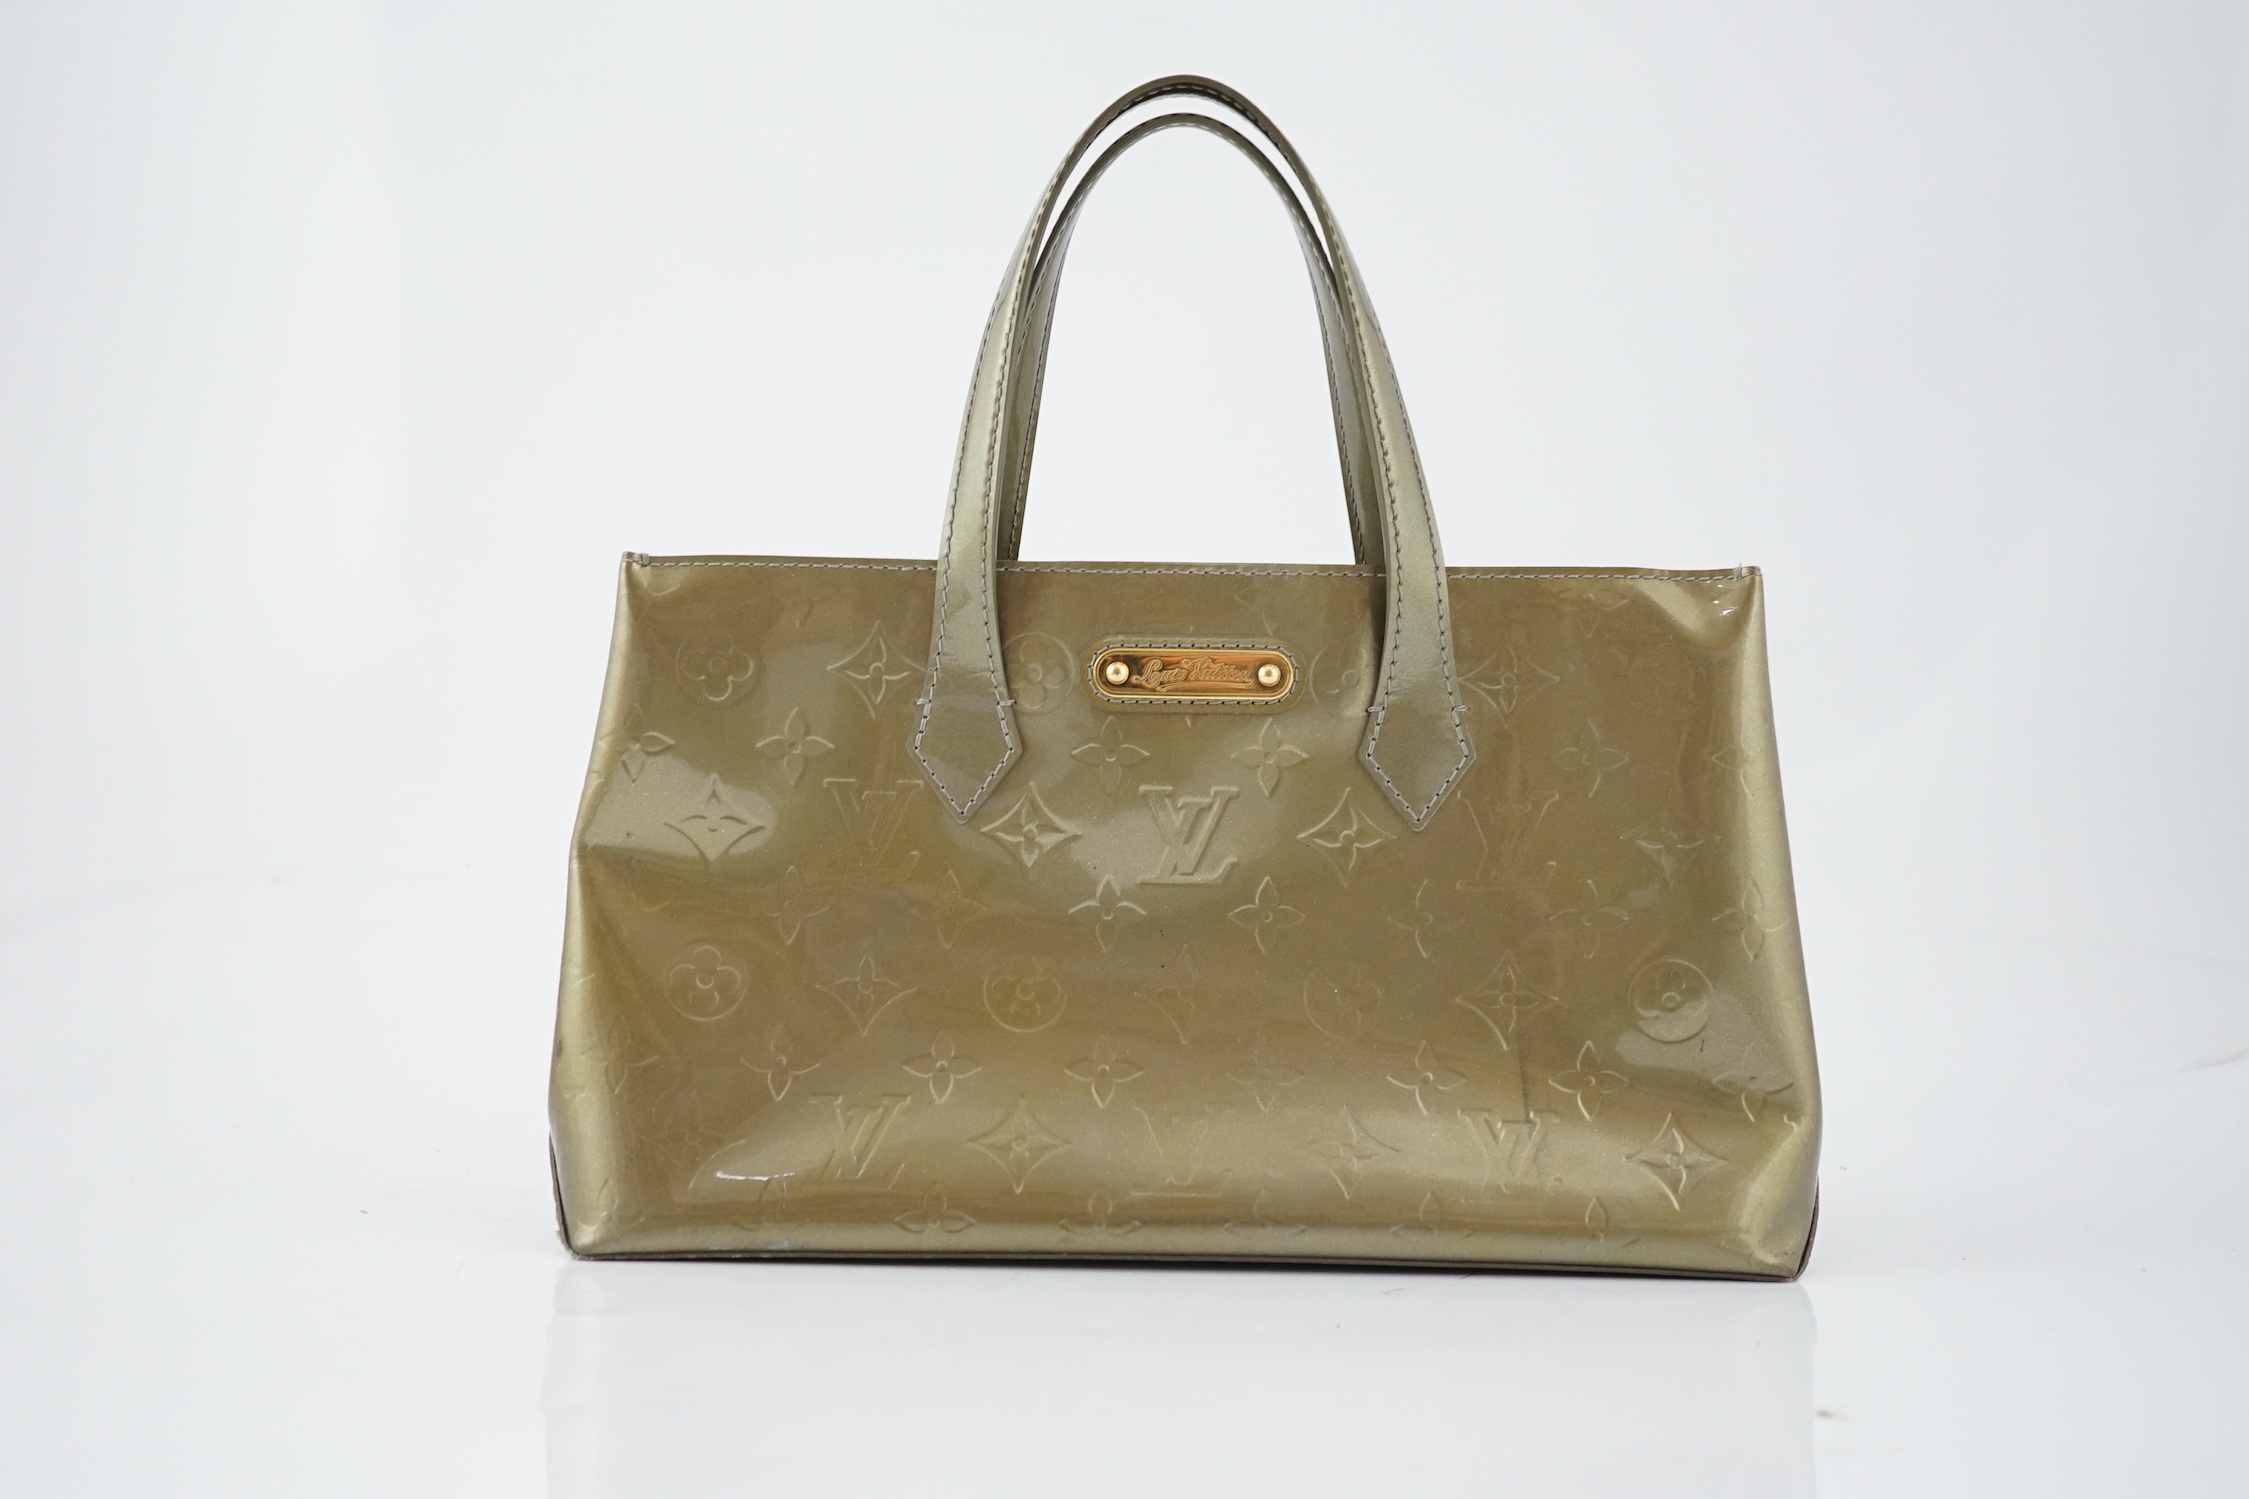 A Louis Vuitton gold metallic monogram tote bag, height 18cm, height to handle 29cm, width 31cm, depth 11.5cm